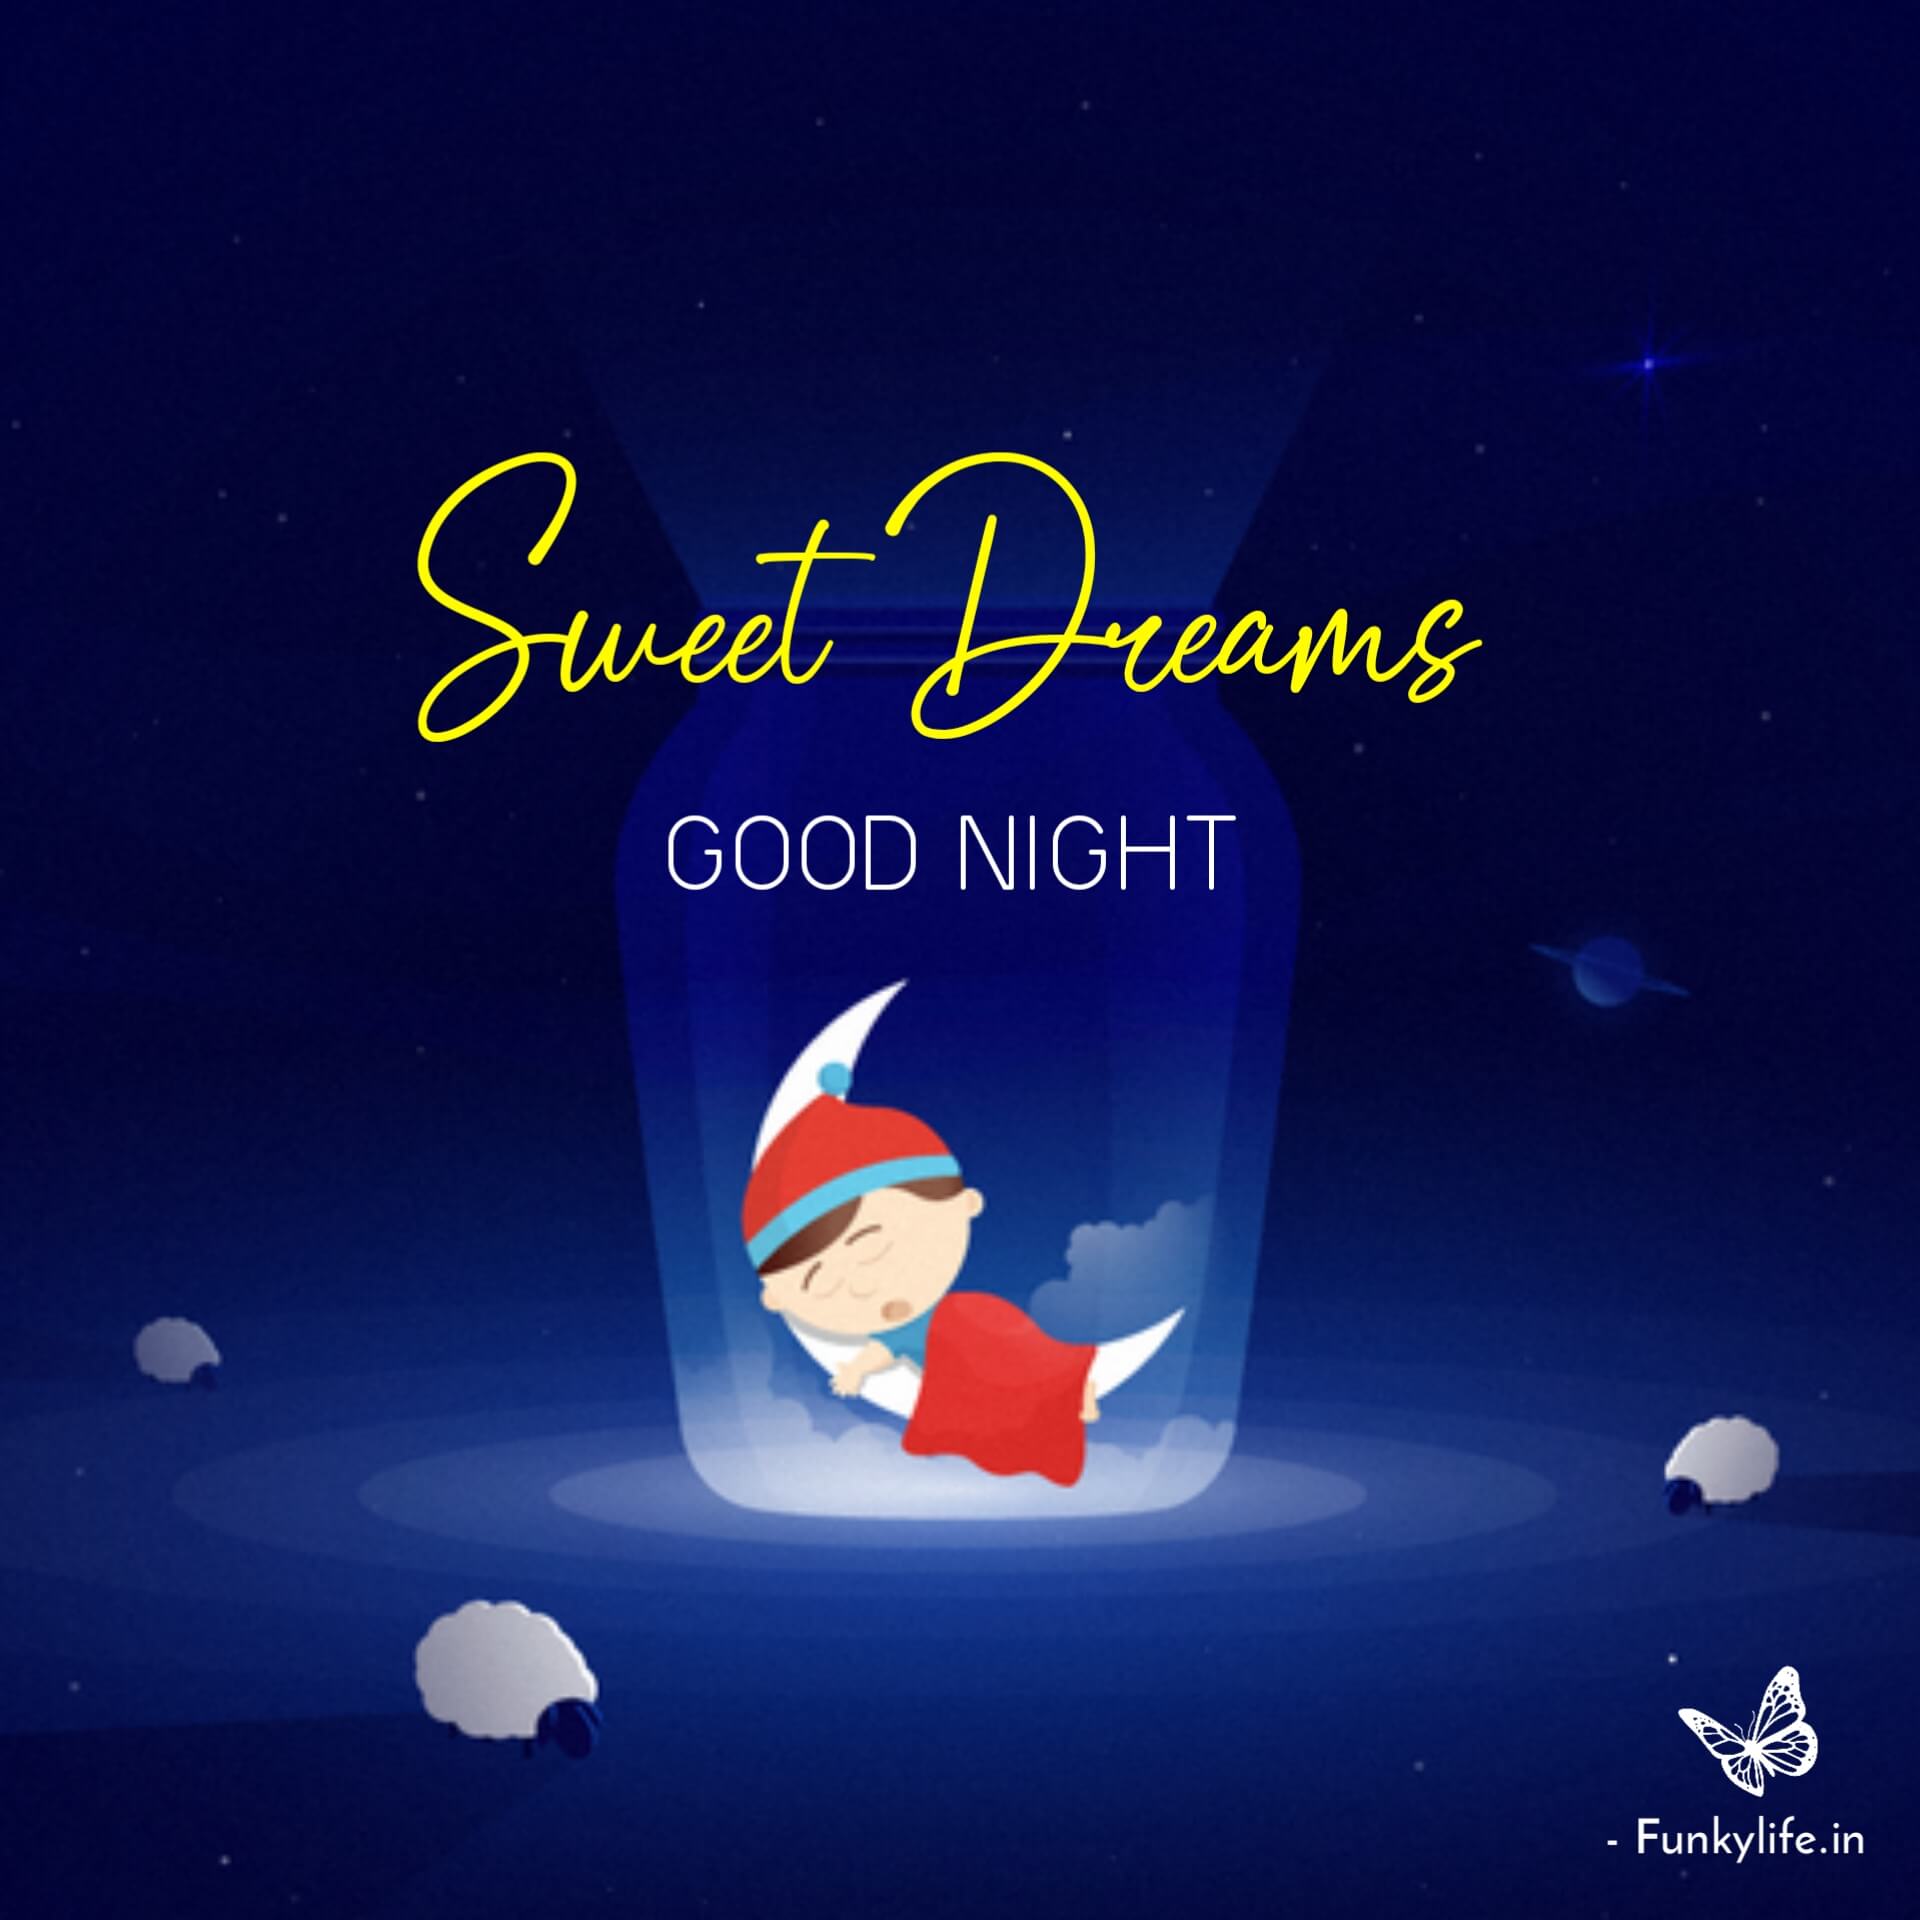 Sweet dreams good night photo